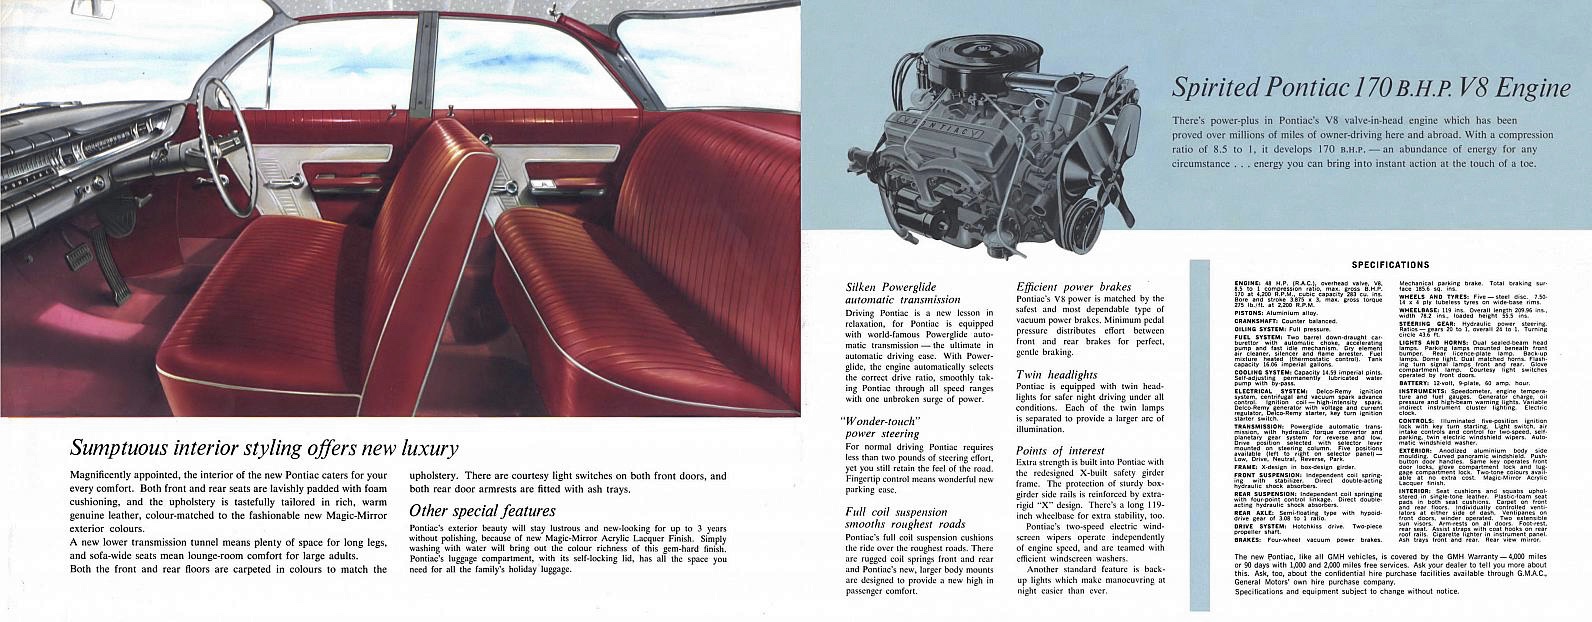 1961 Pontiac Laurentian Brochure Page 1